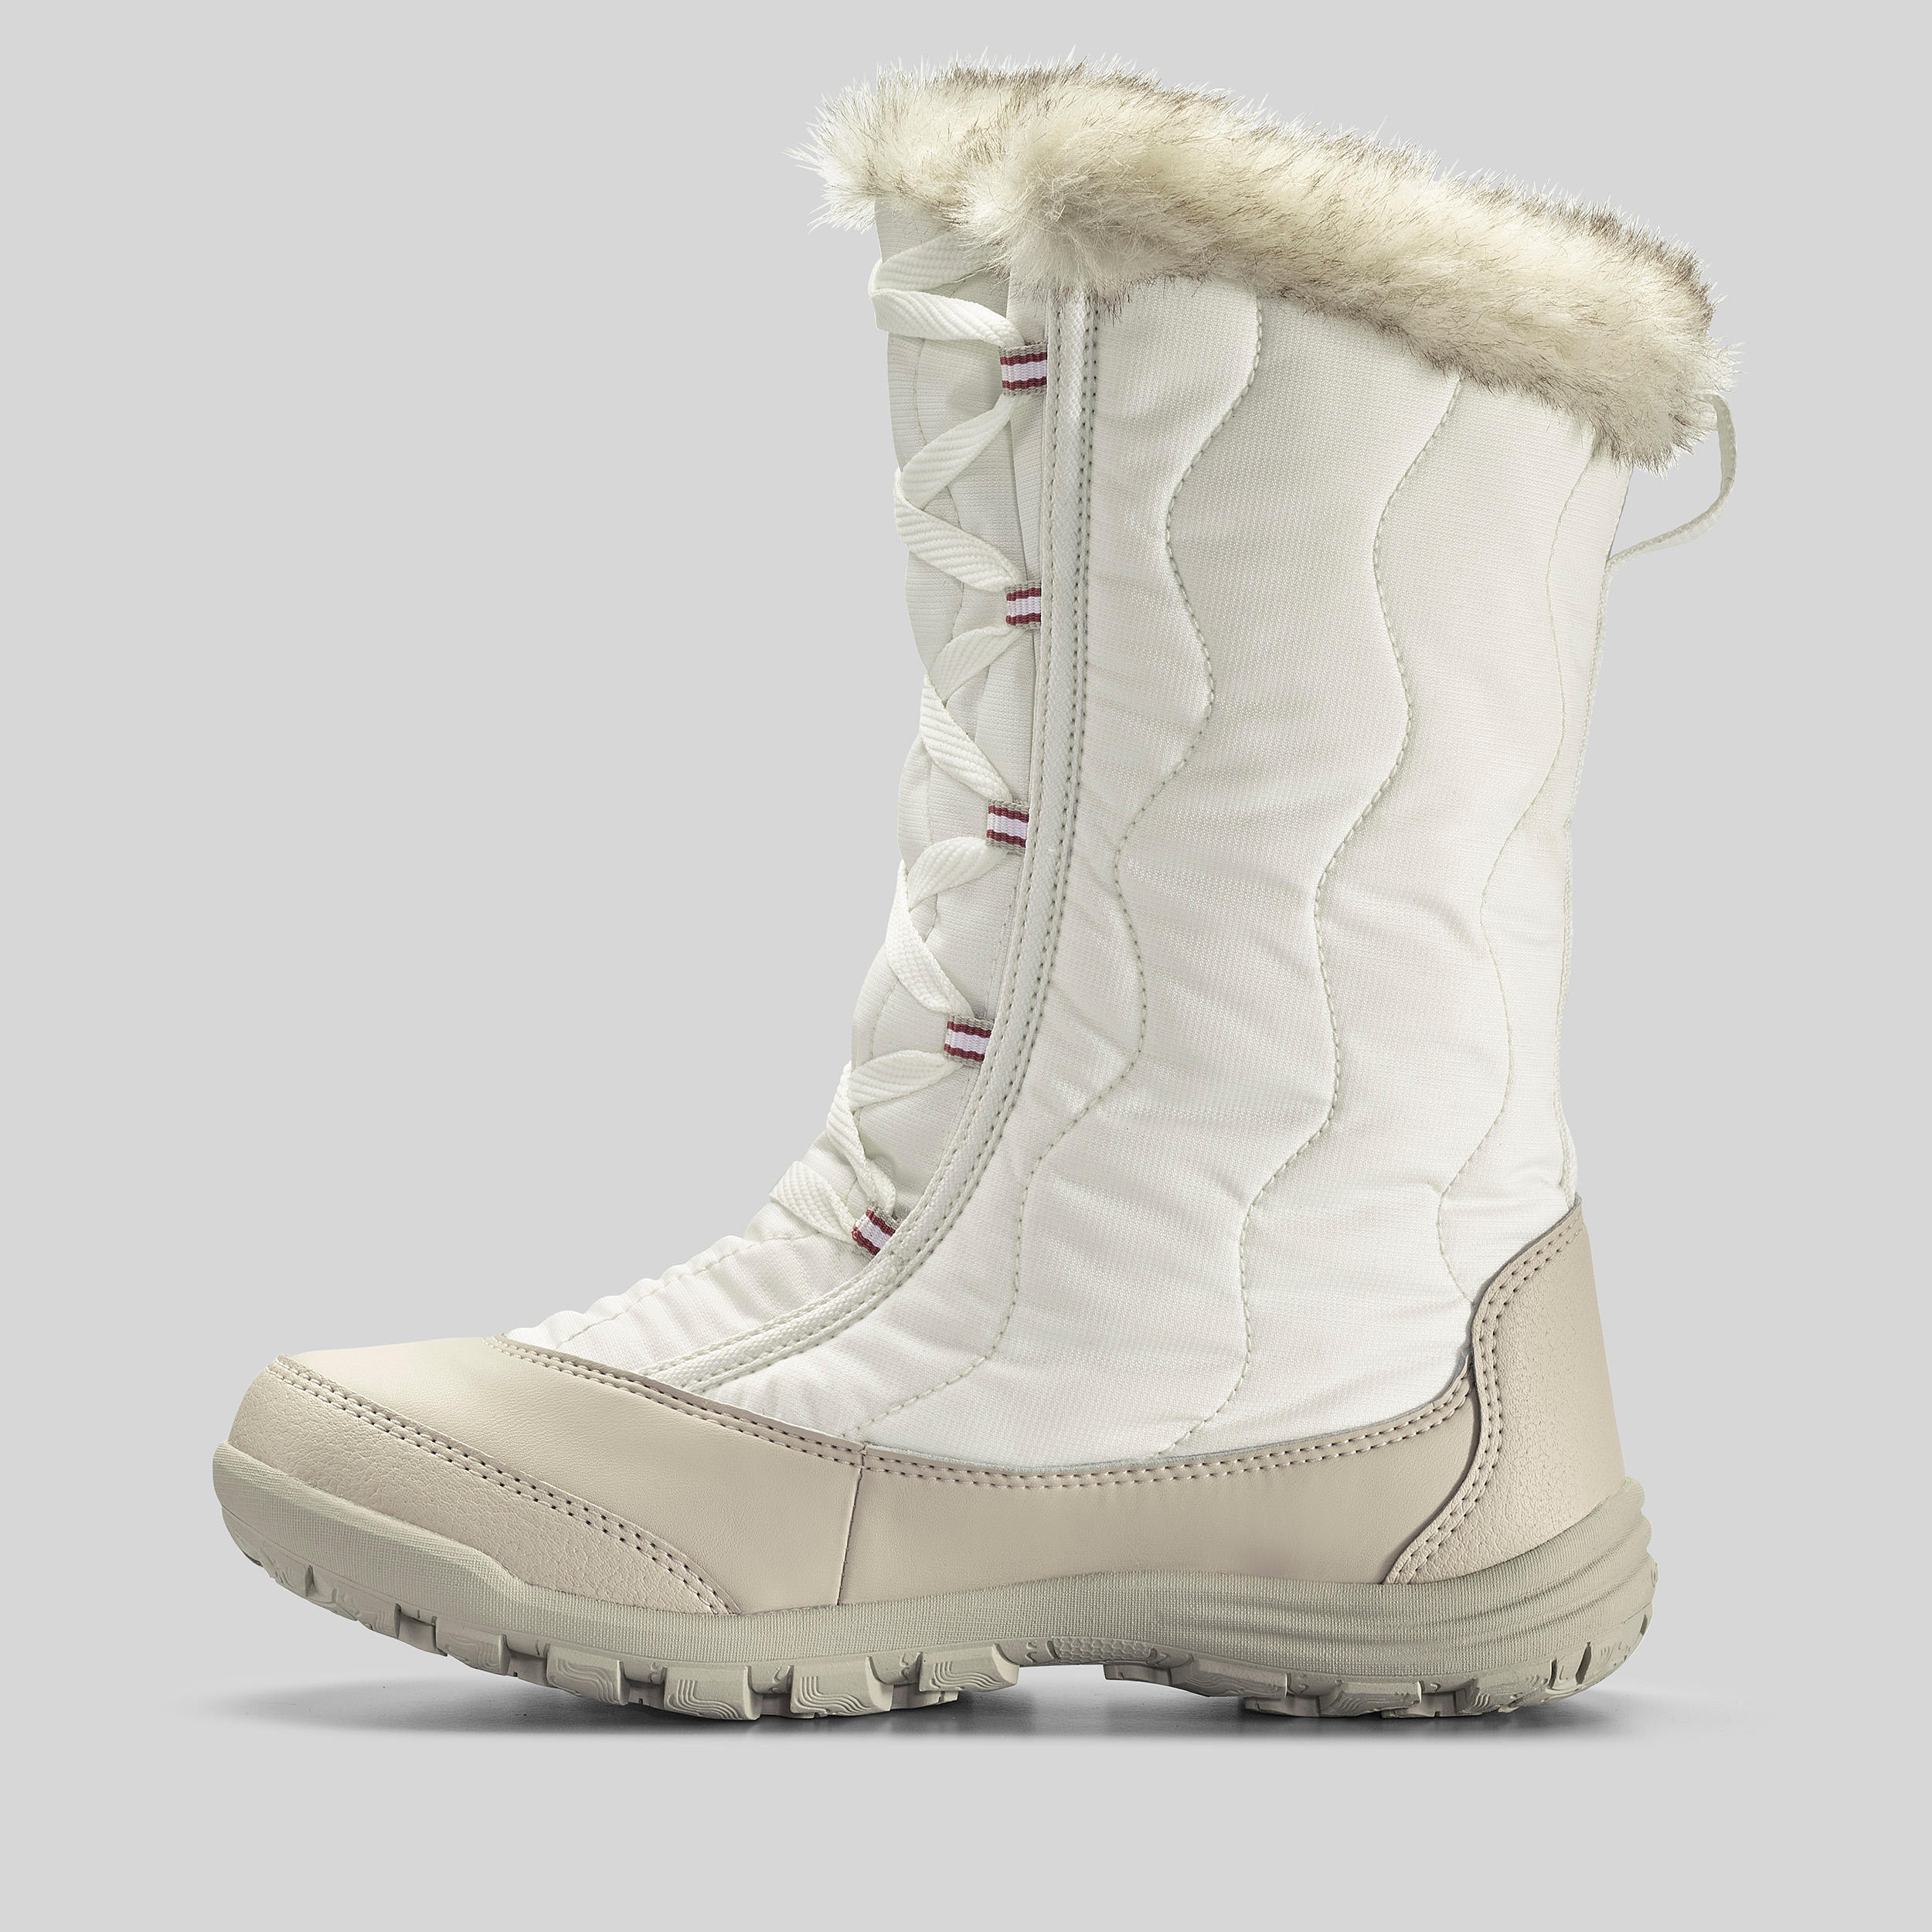 Kids’ Warm Waterproof Hiking Snow Boots SH500 X-Warm Zip Sizes 11.5 - 5.5 3/4